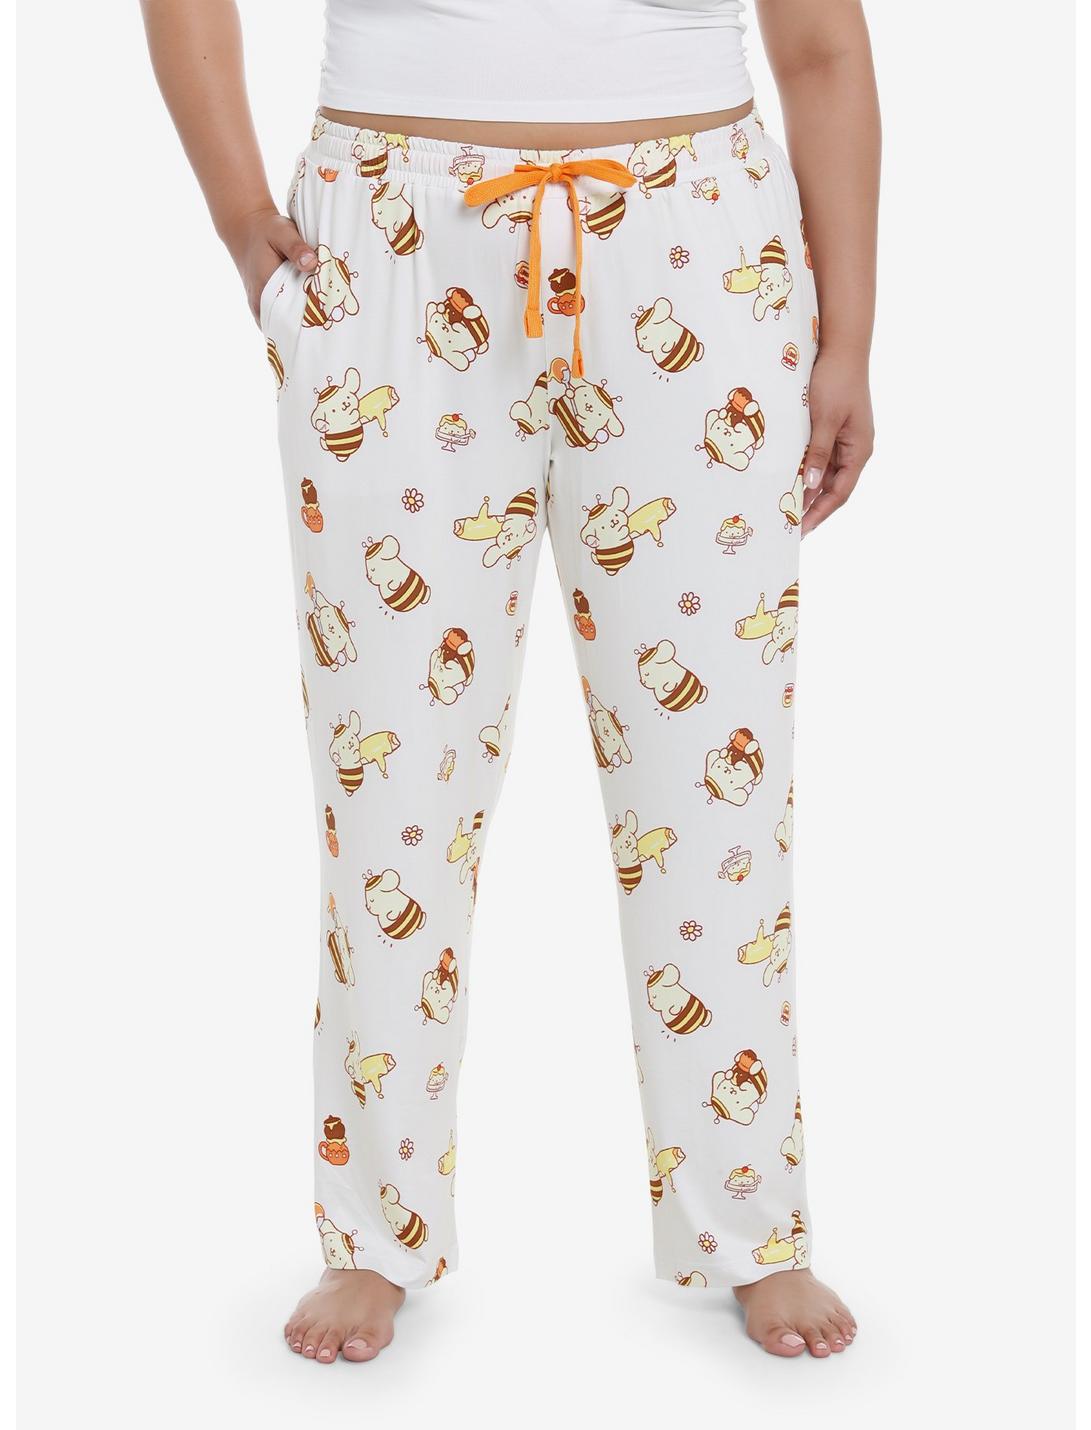 Pompompurin Honeybee Pastries Girls Pajama Pants Plus Size, SAND, hi-res